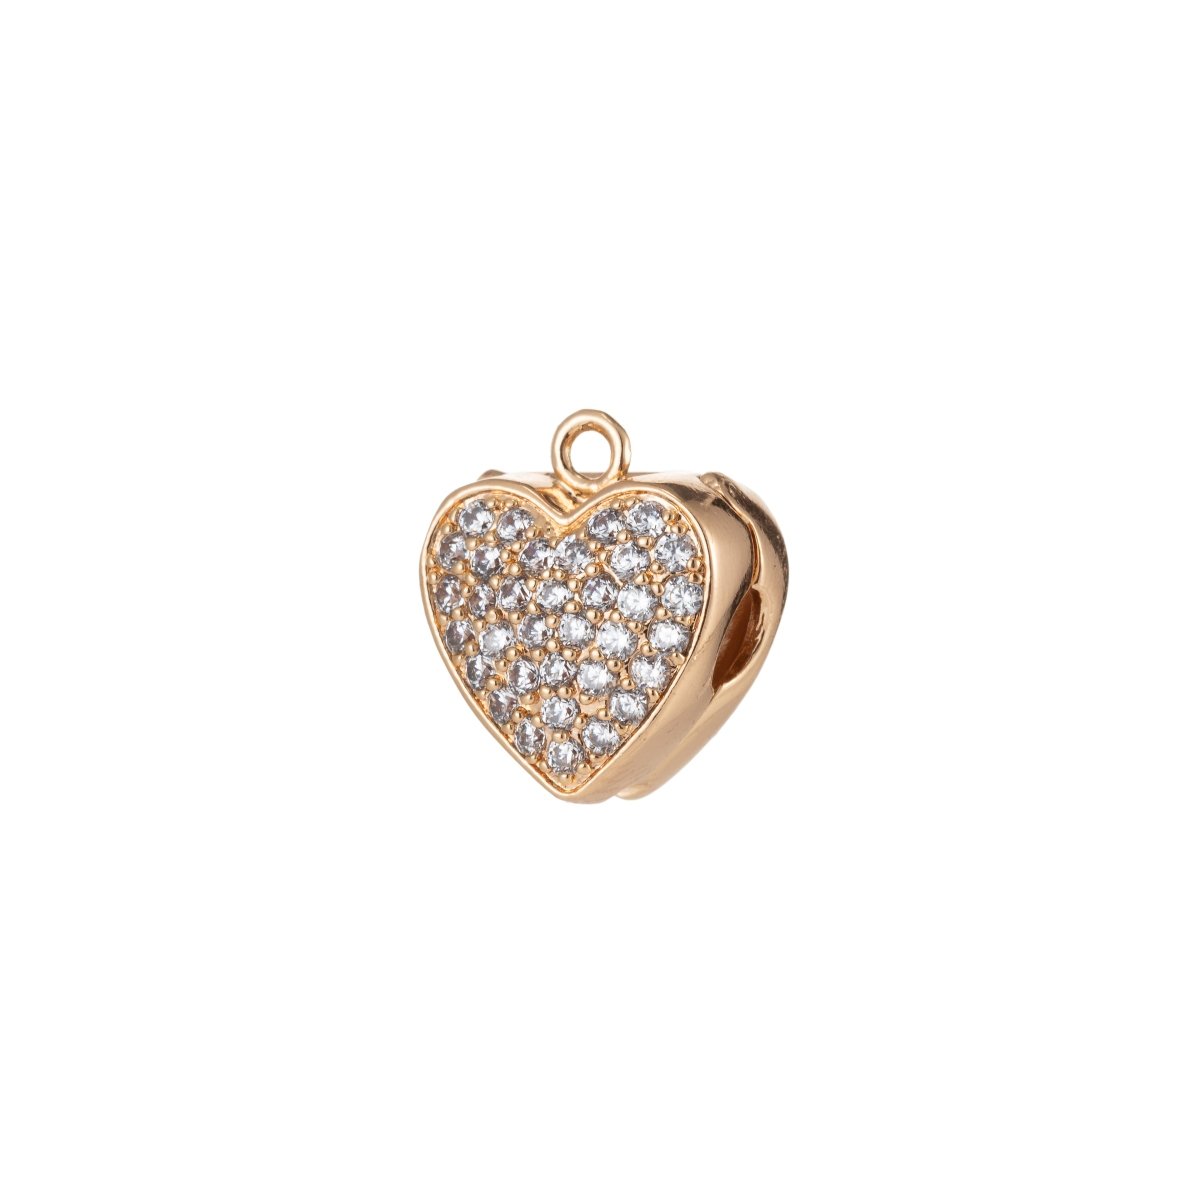 Tiny Missing Couple Heart Beads CZ Mini Valentine Miss You Writings Heart Jewelry Making Beads B-346 - DLUXCA